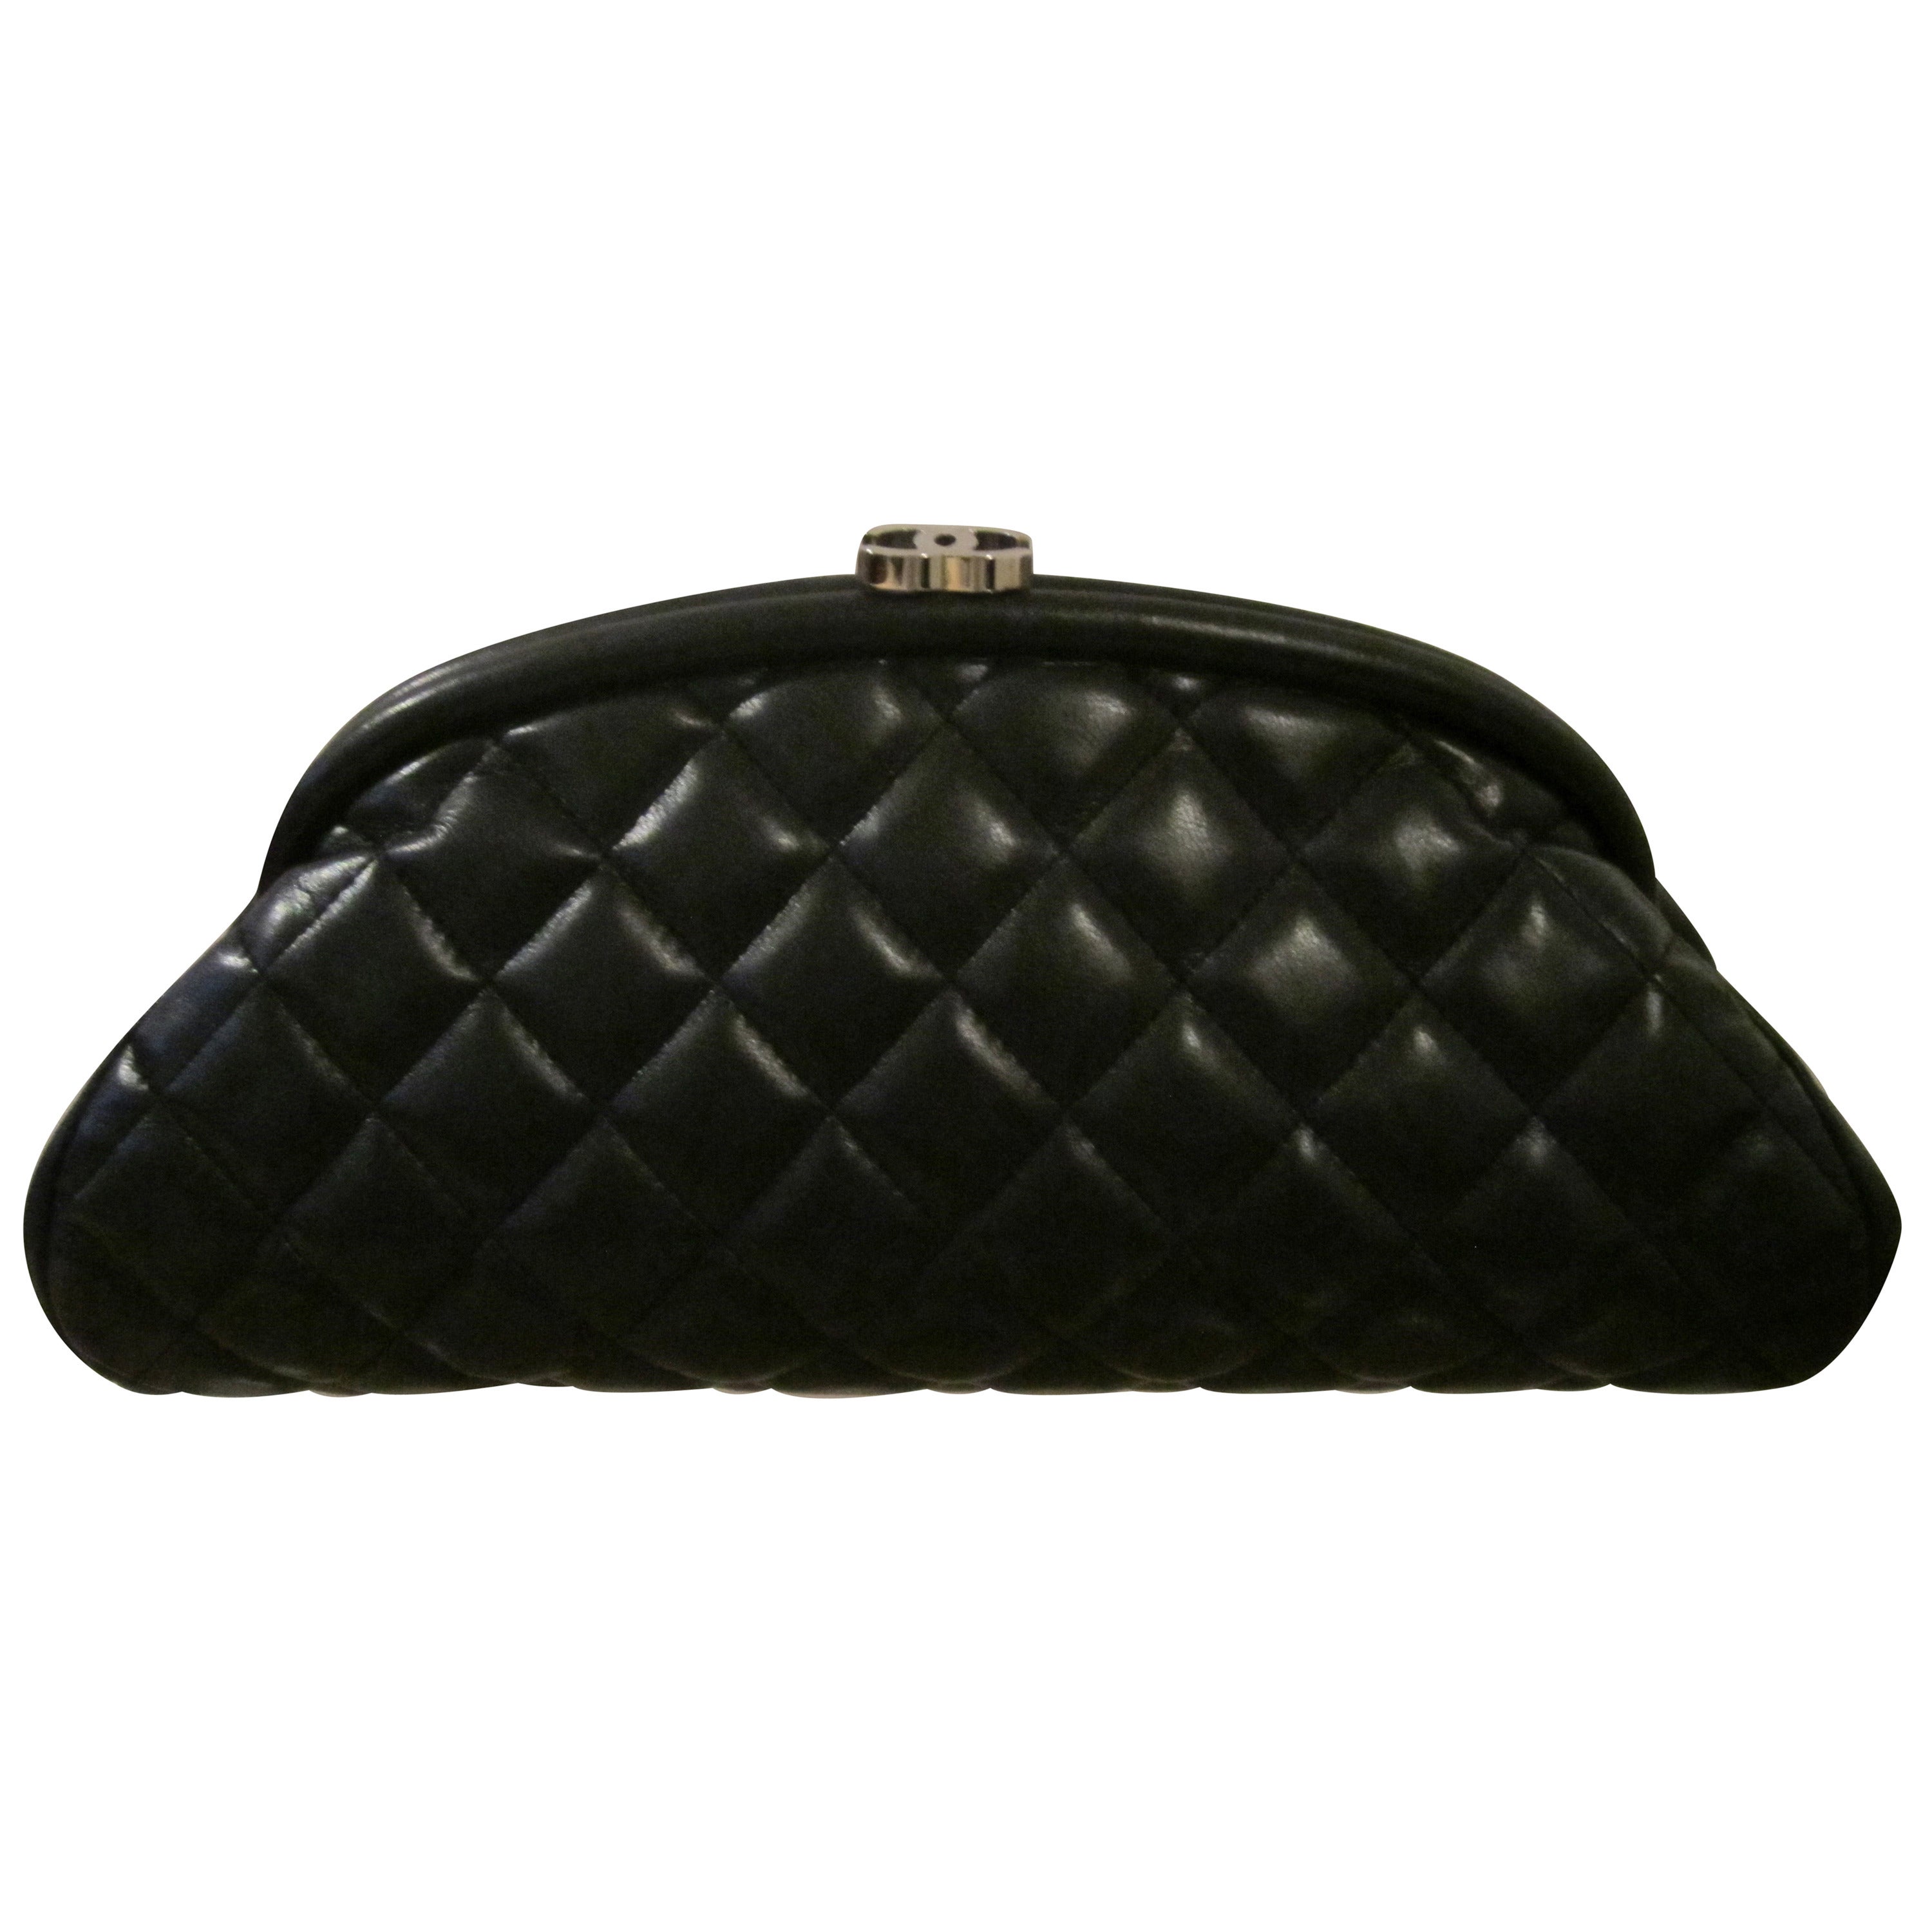 Authentic Chanel Black Leather Classic Clutch Handbag